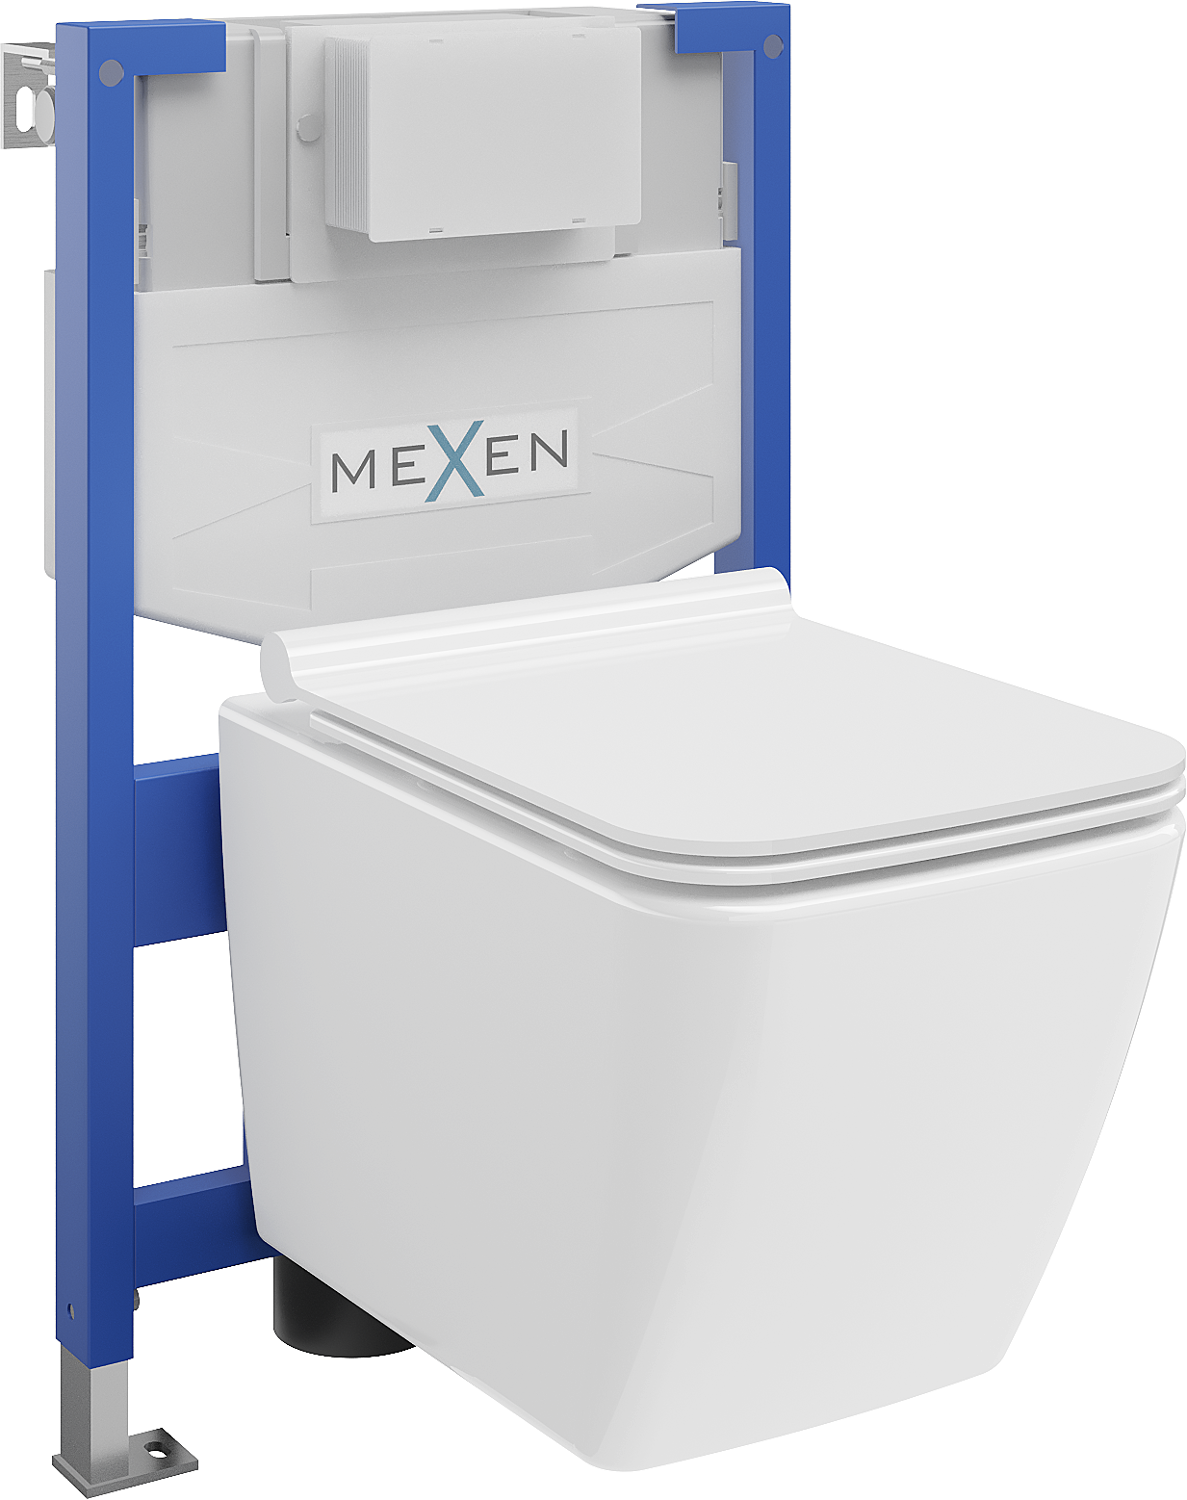 Mexen podomietkový WC systém Felix XS-F s WC misou Vega a pomaly klesajúcou doskou, biela- 68030654000